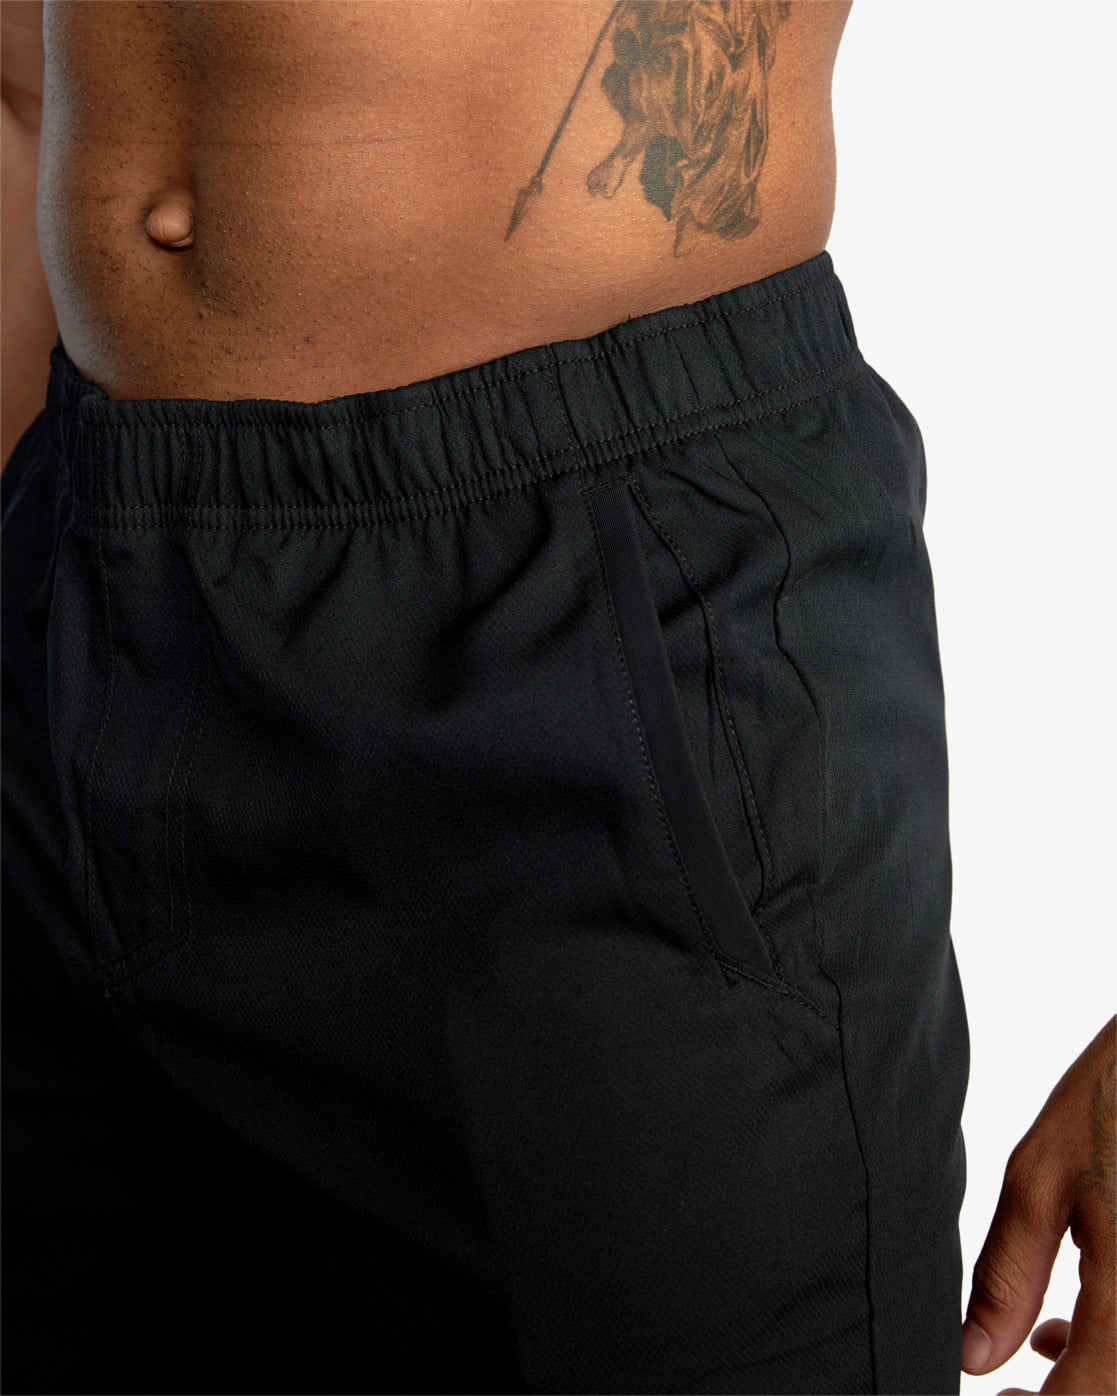 Pantalones cortos Rvca Sport Yogger IV Black | Pantalones cortos de Hombre | Todos los pantalones de hombre | surfdevils.com